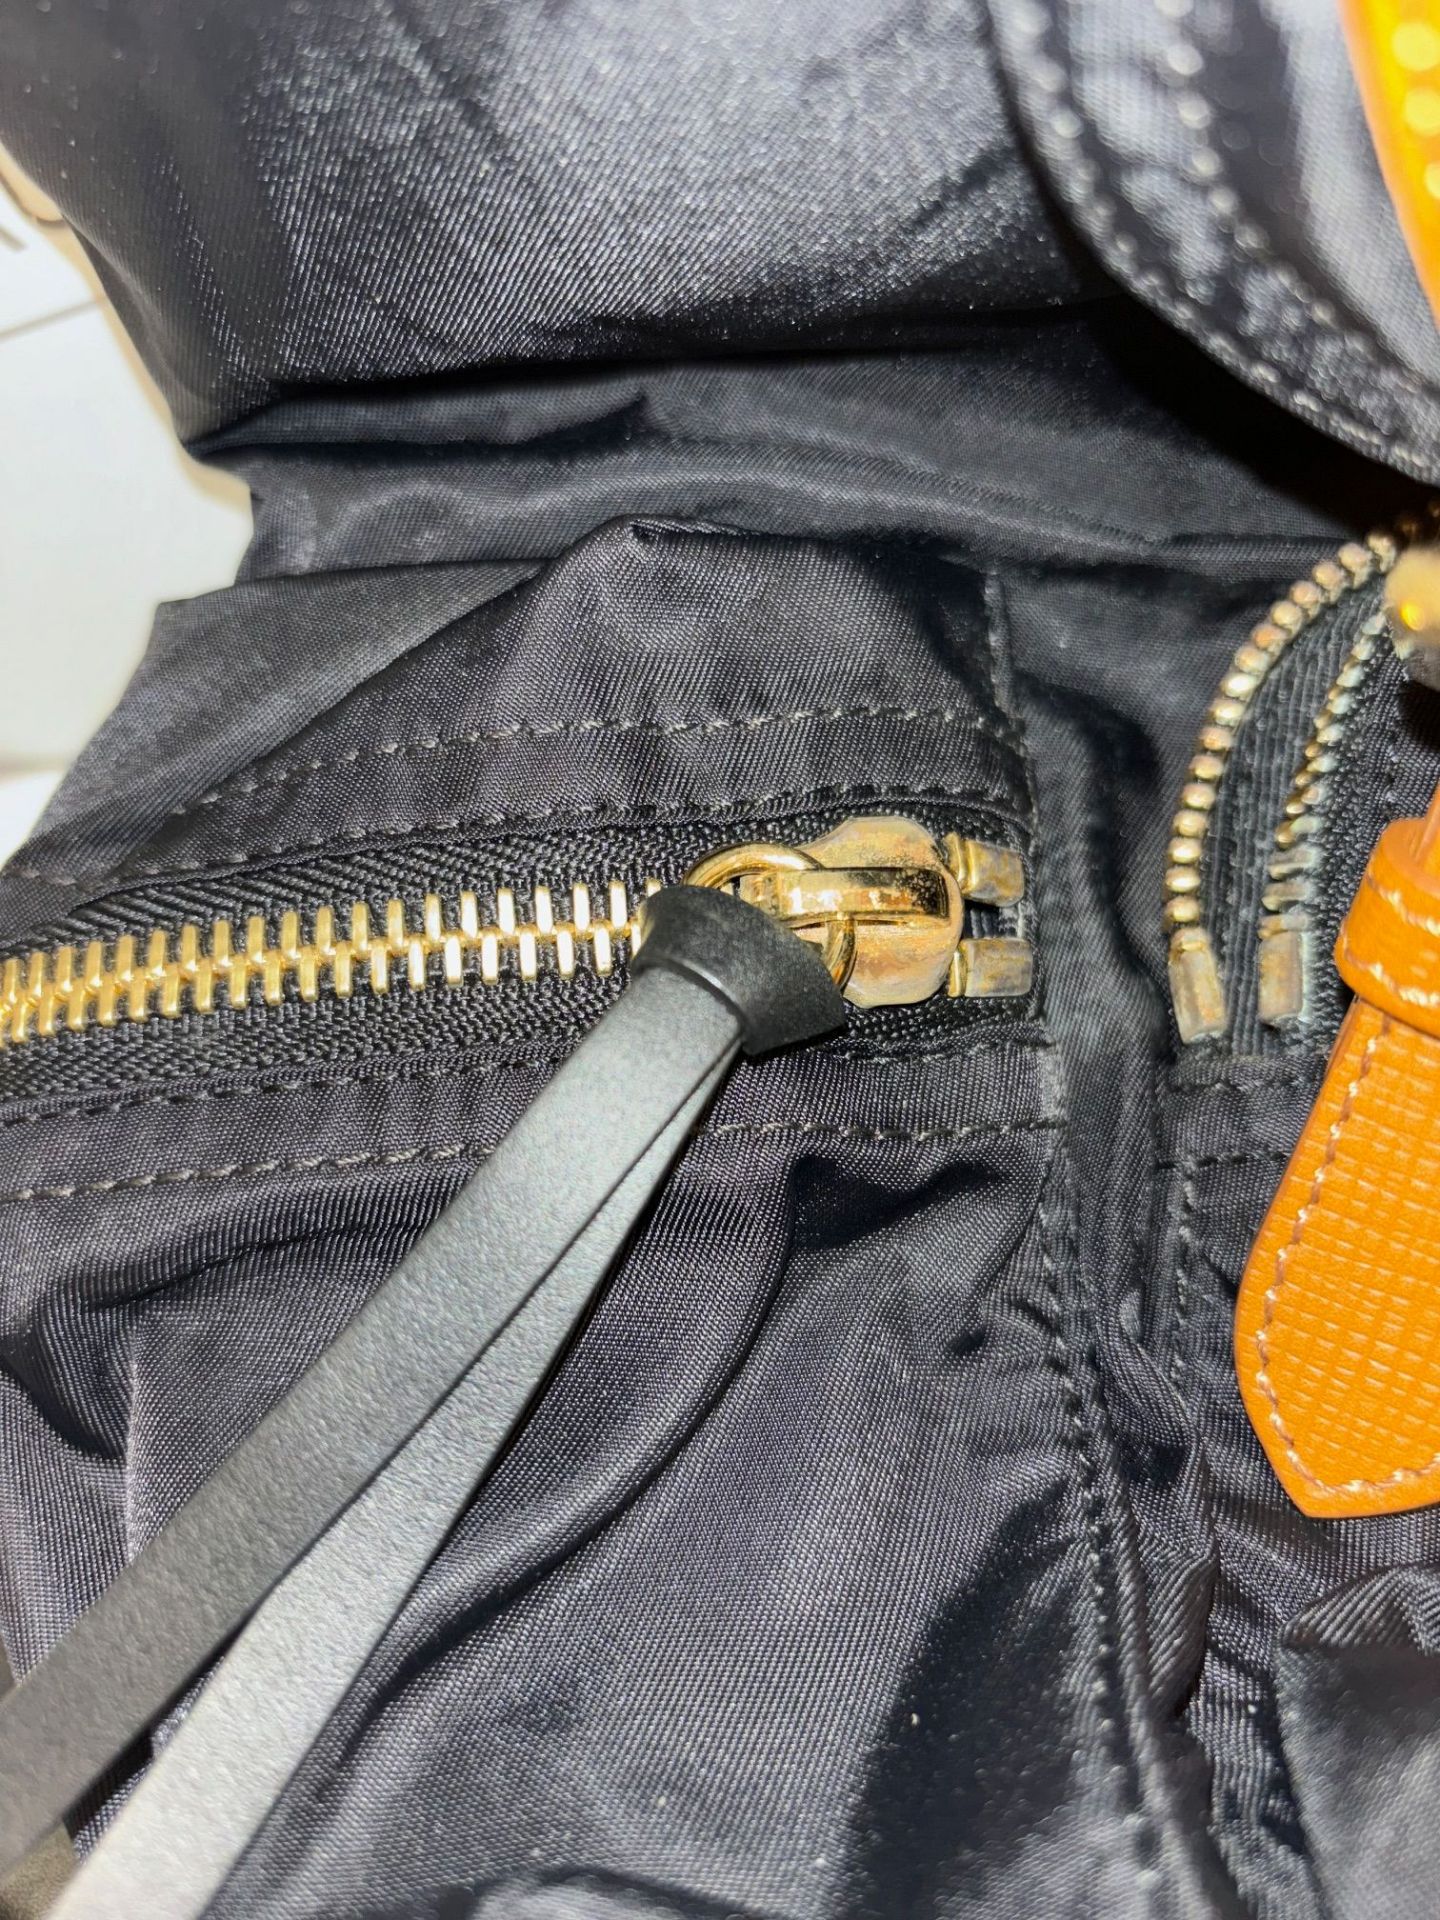 Burberry black nylon backpack. 35x35cm - Image 7 of 13